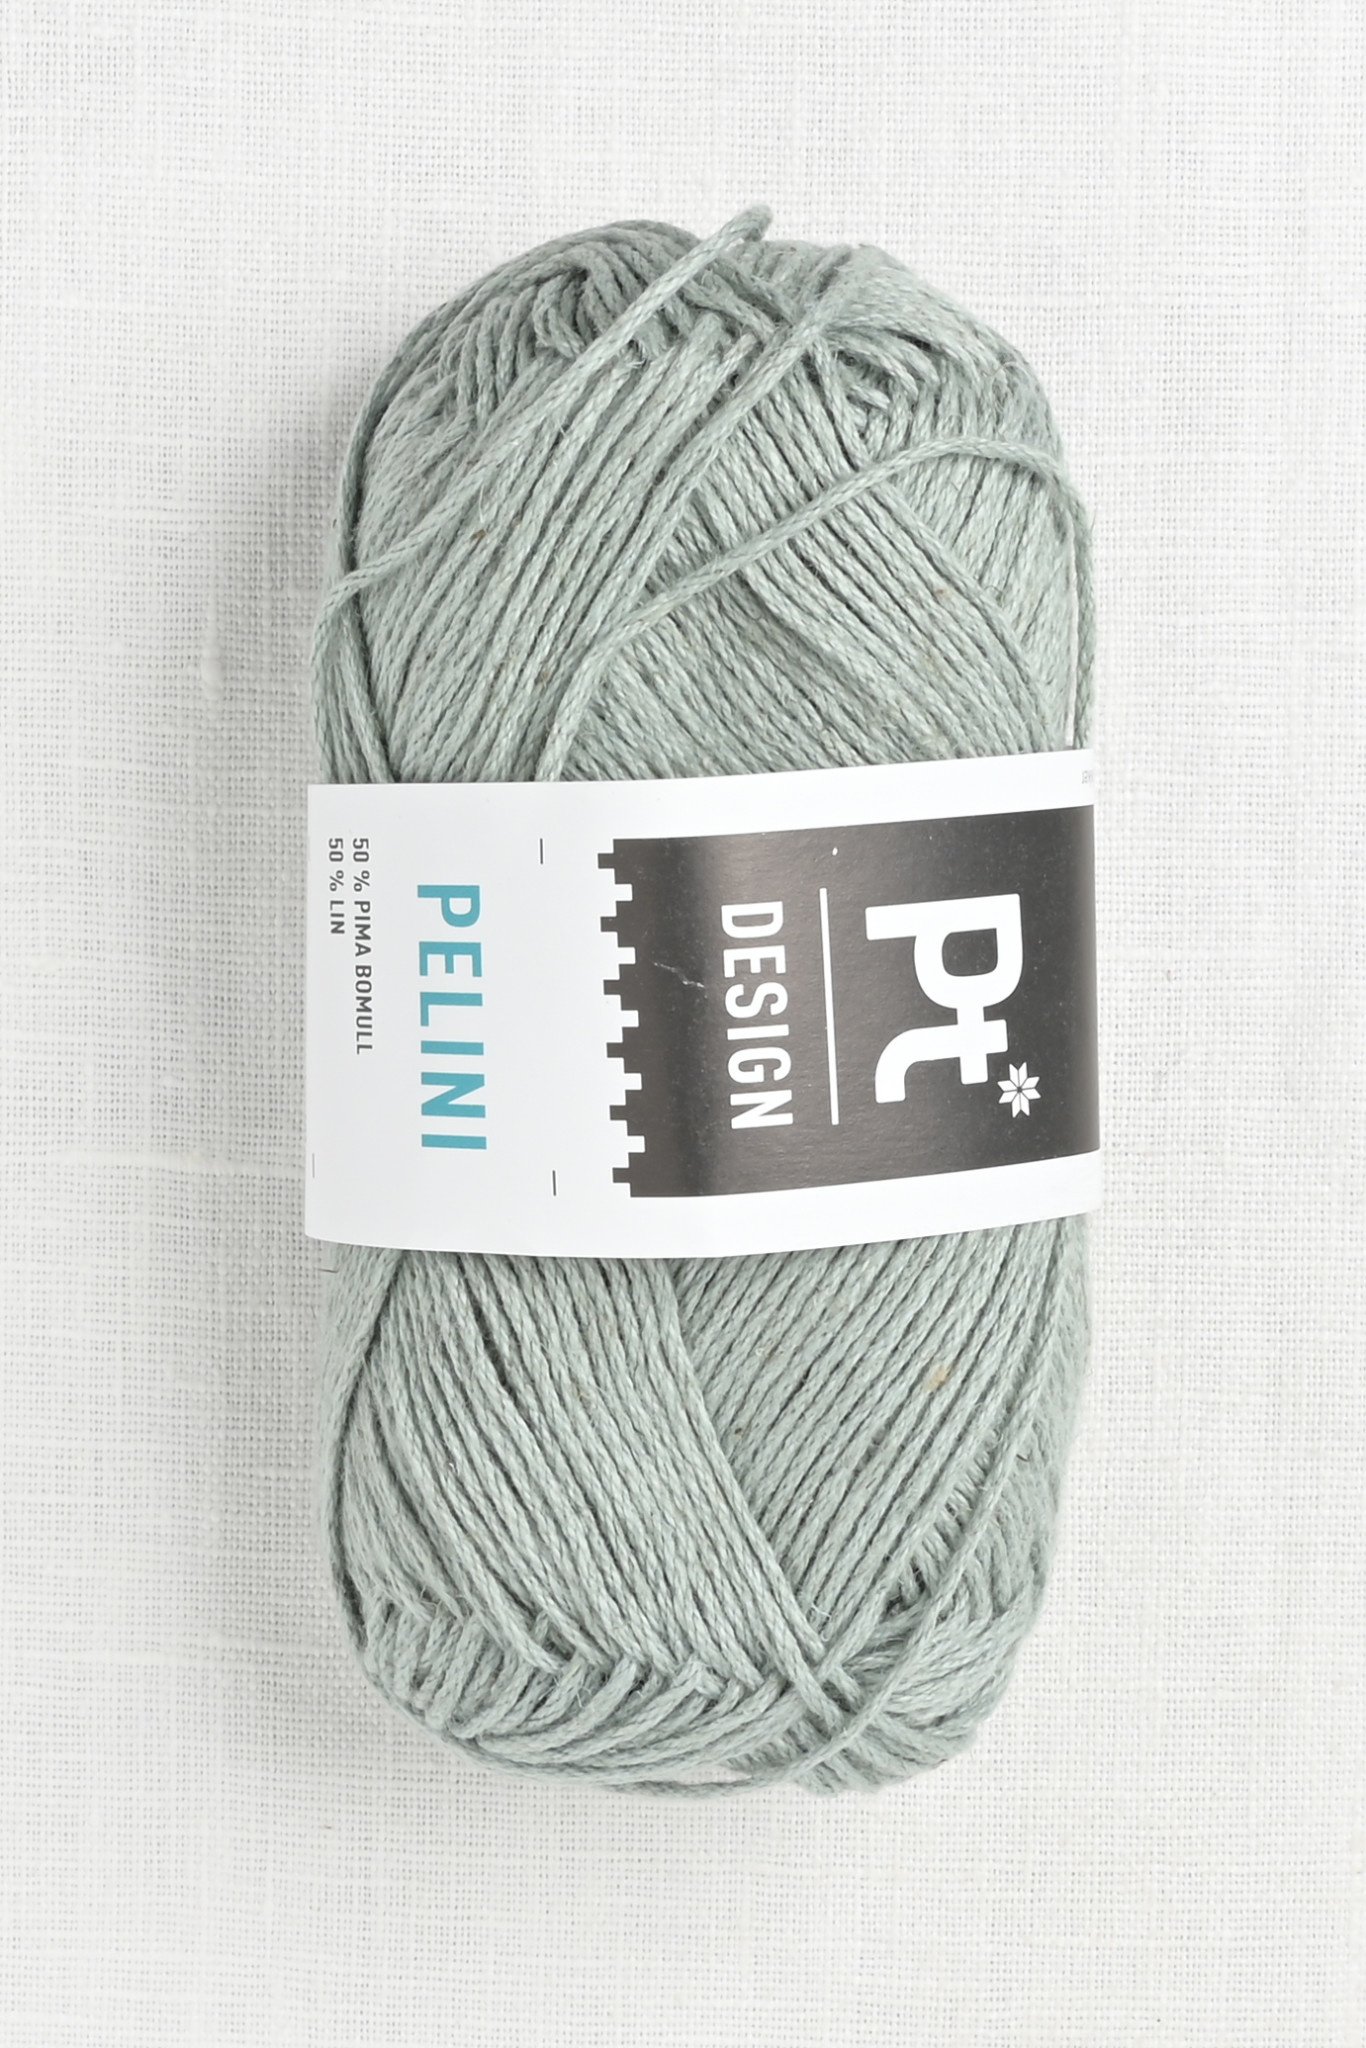 Rauma Pelini 891 Sage - Wool and Company Yarn